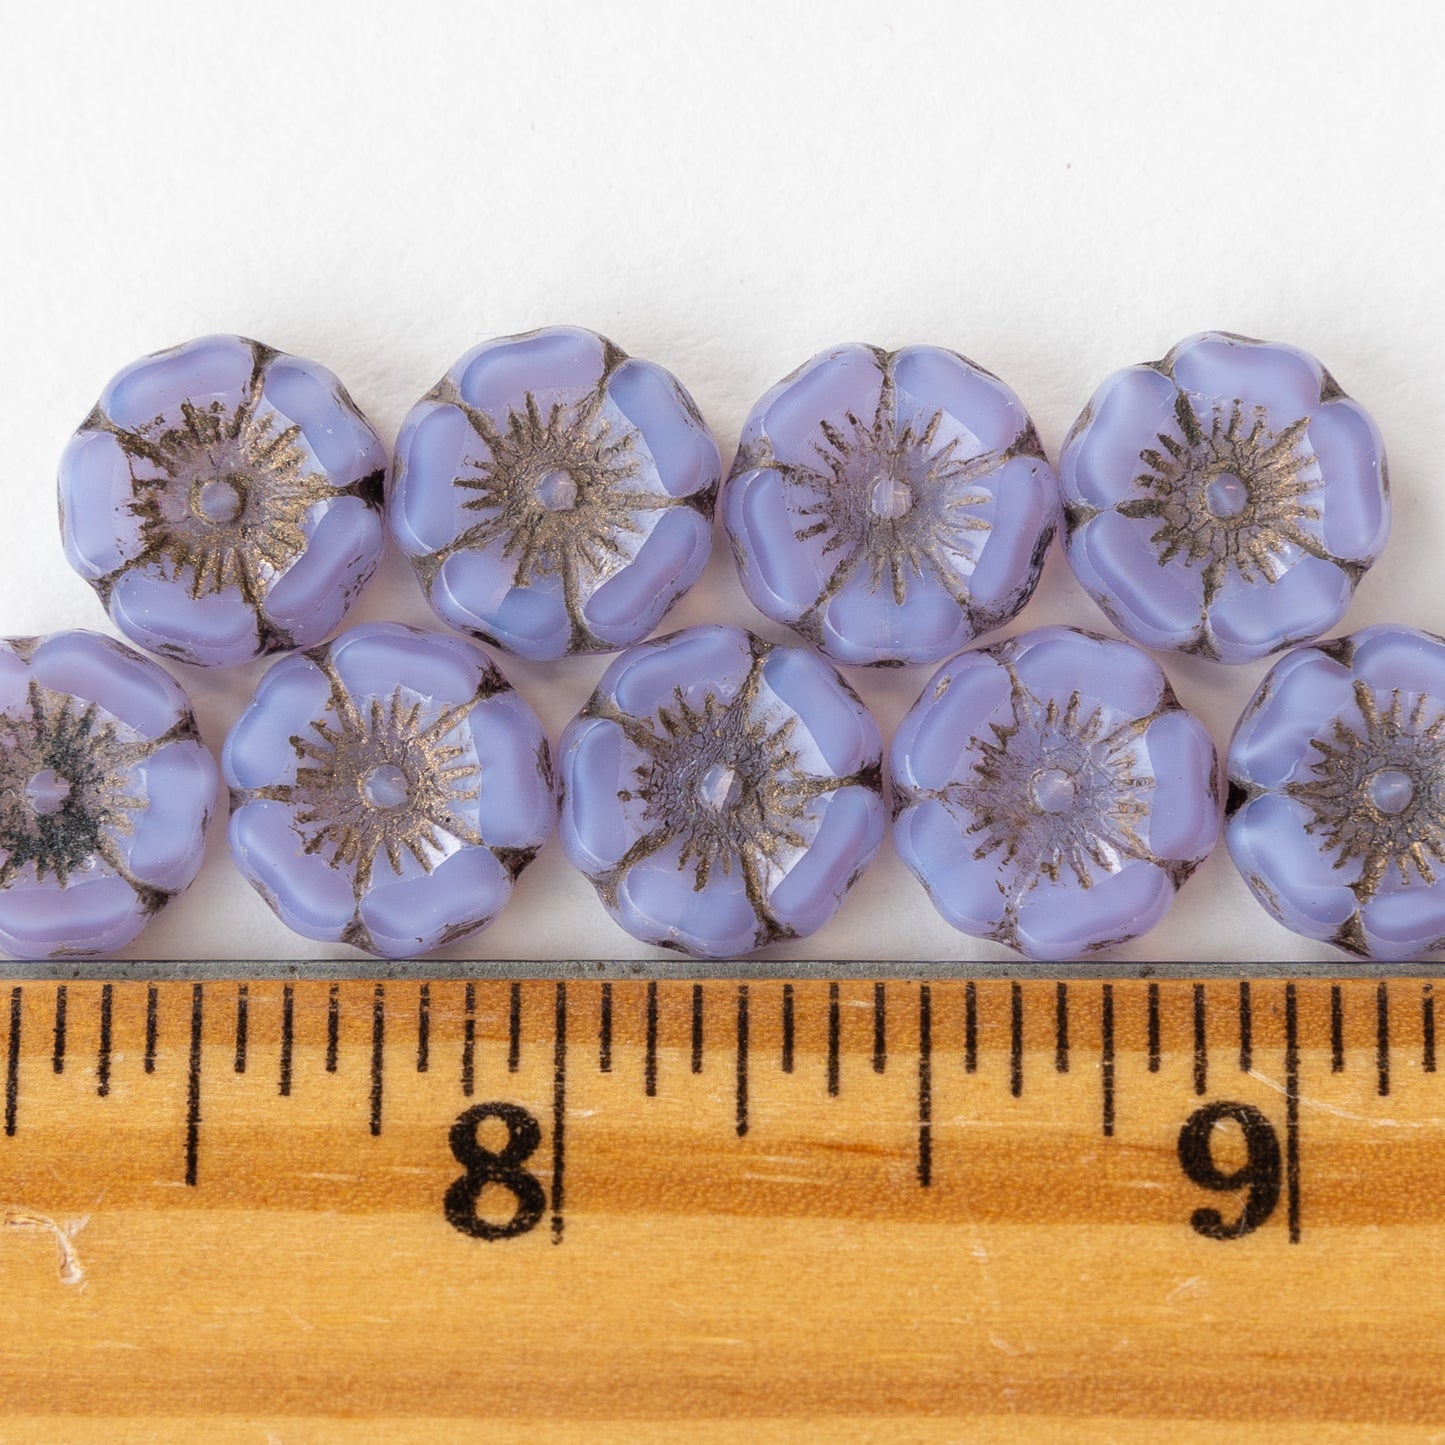 12mm Glass Flower Beads - Lavender Opaline  - 12 Beads